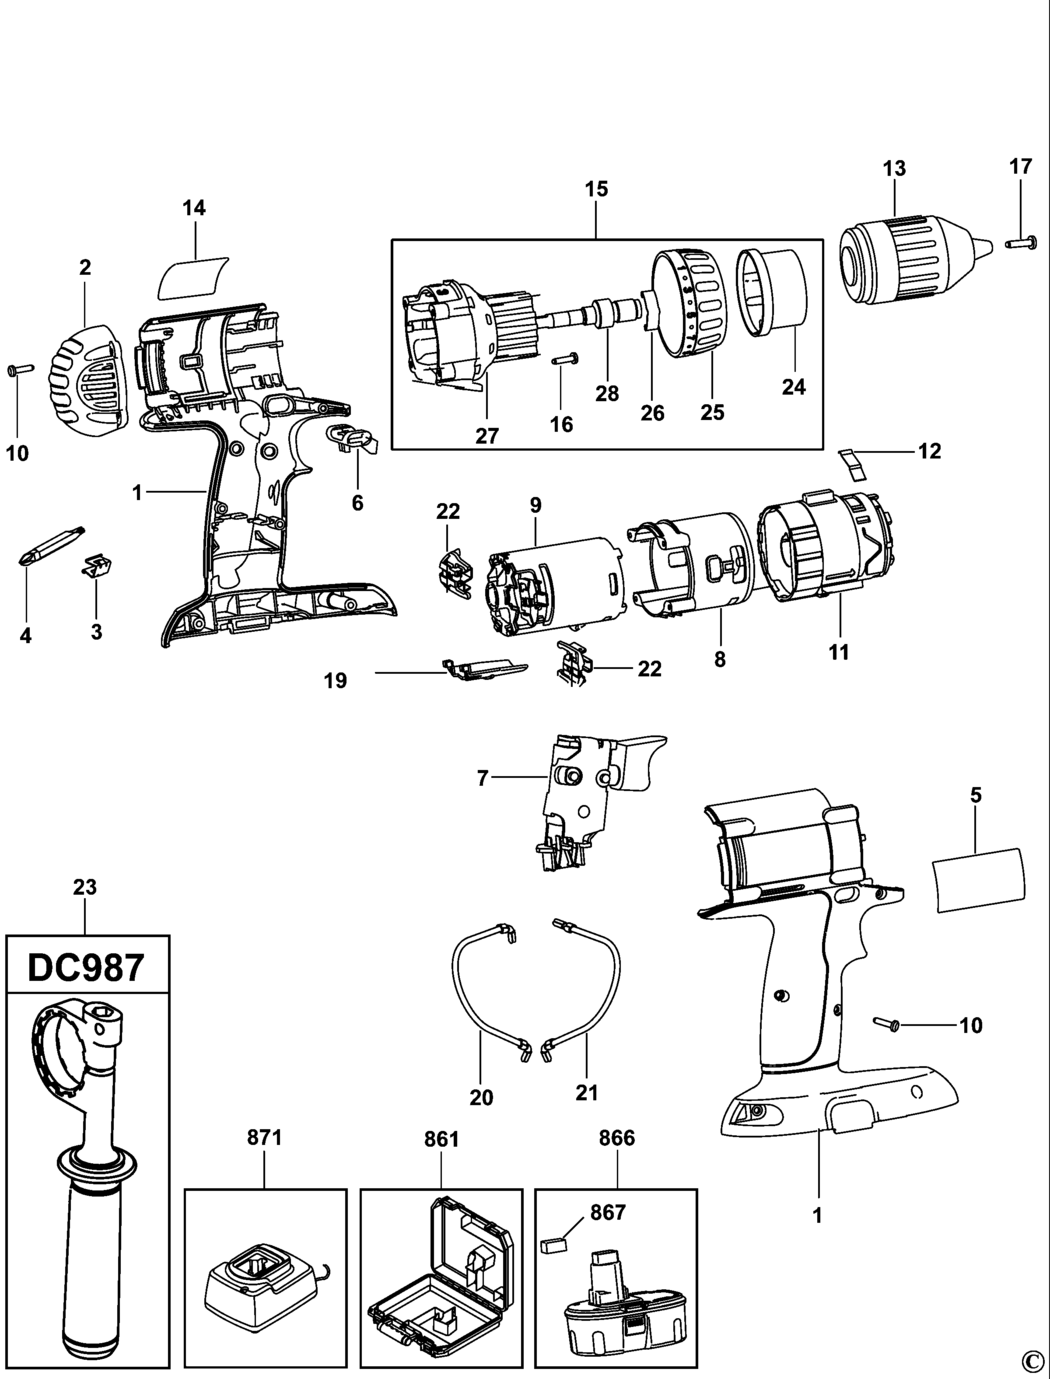 Dewalt DC983 Type 1 Cordless Drill Spare Parts